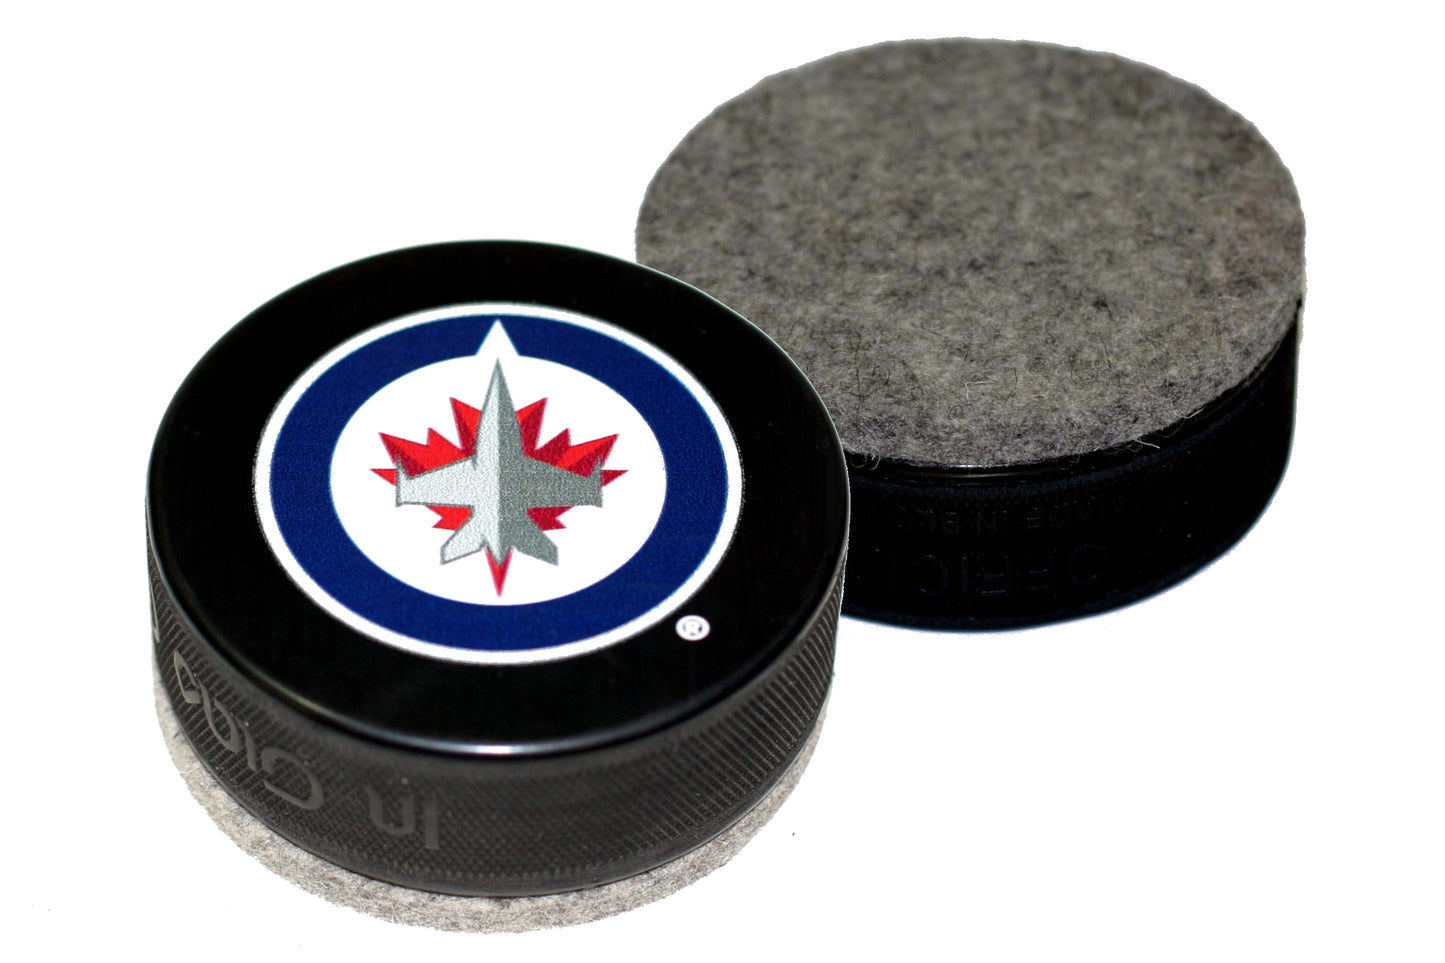 Winnipeg Jets Basic Series Hockey Puck Board Eraser For Chalk & Whiteboards